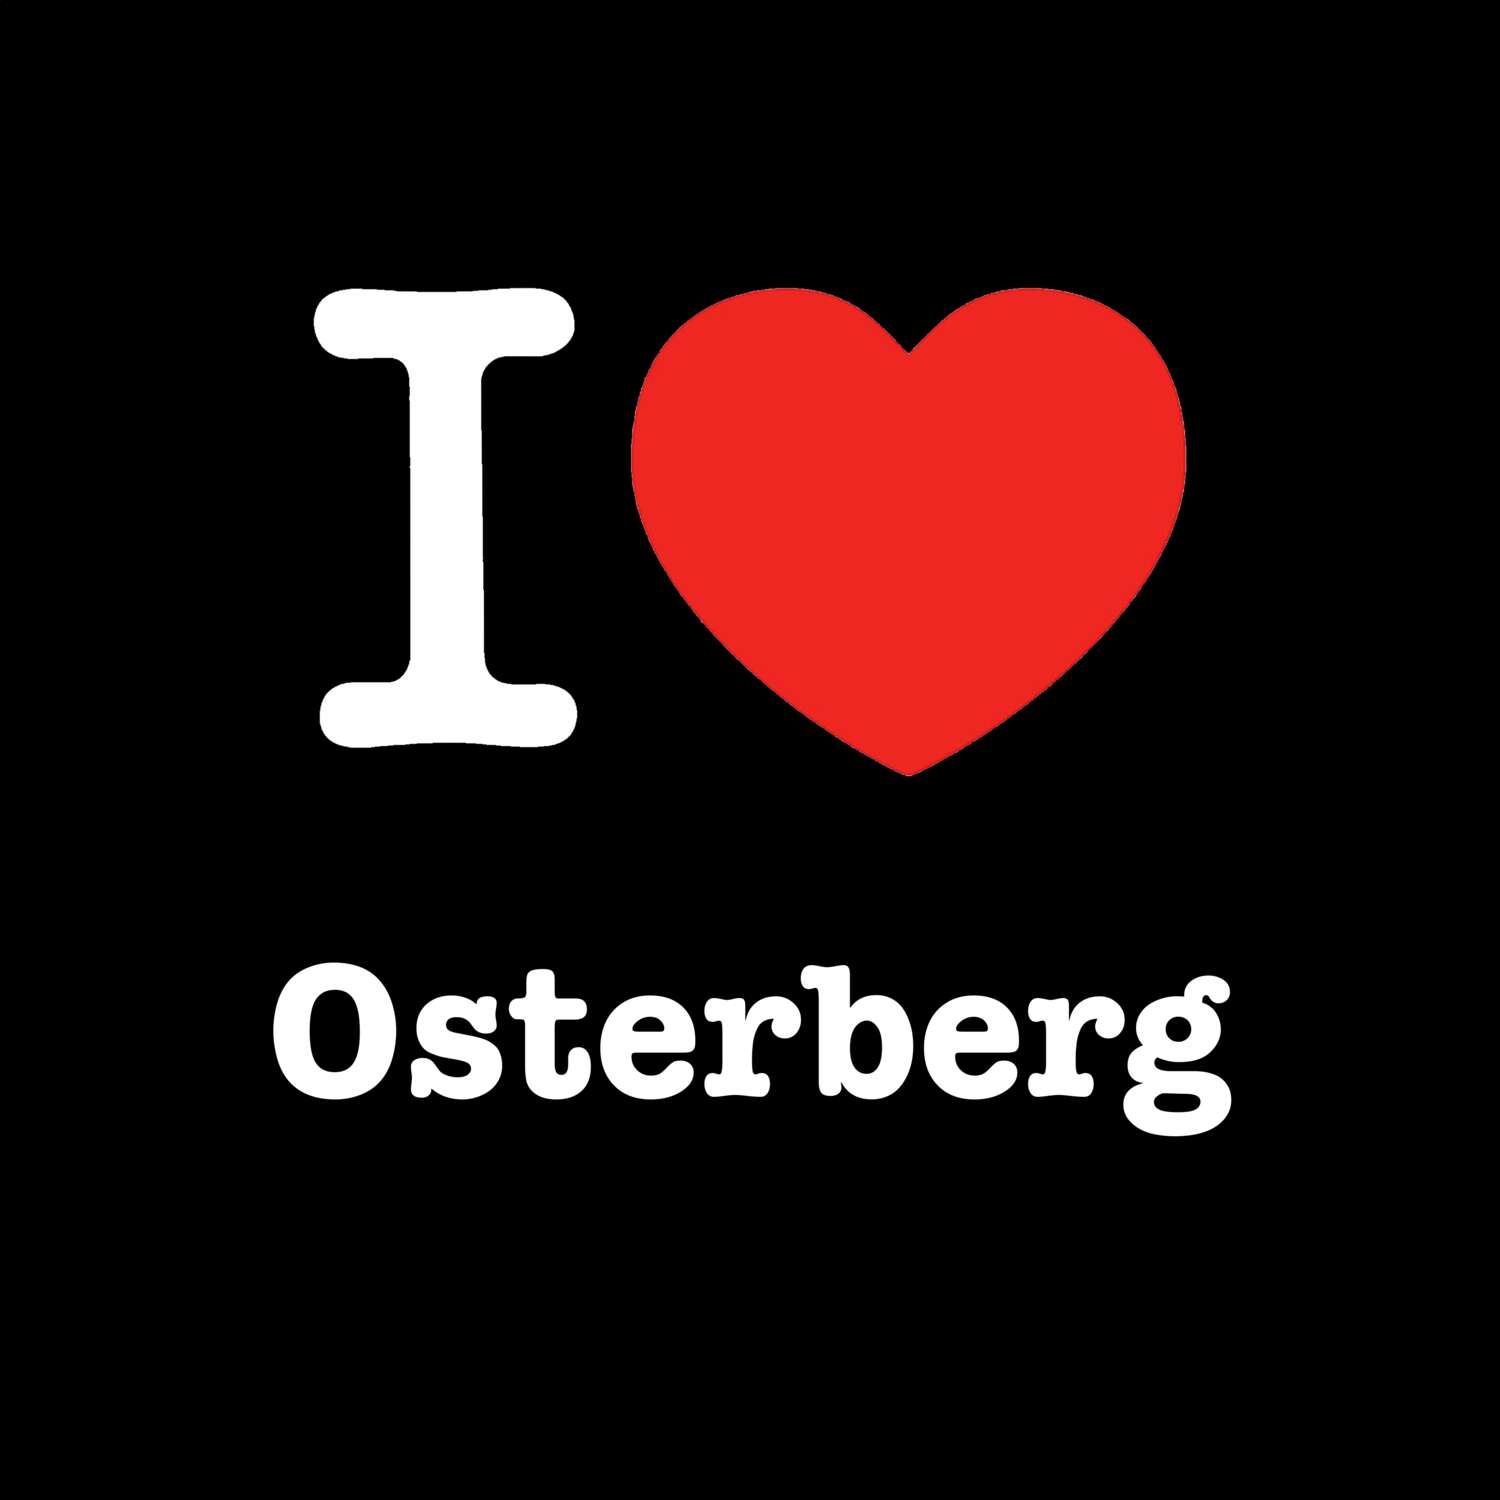 Osterberg T-Shirt »I love«